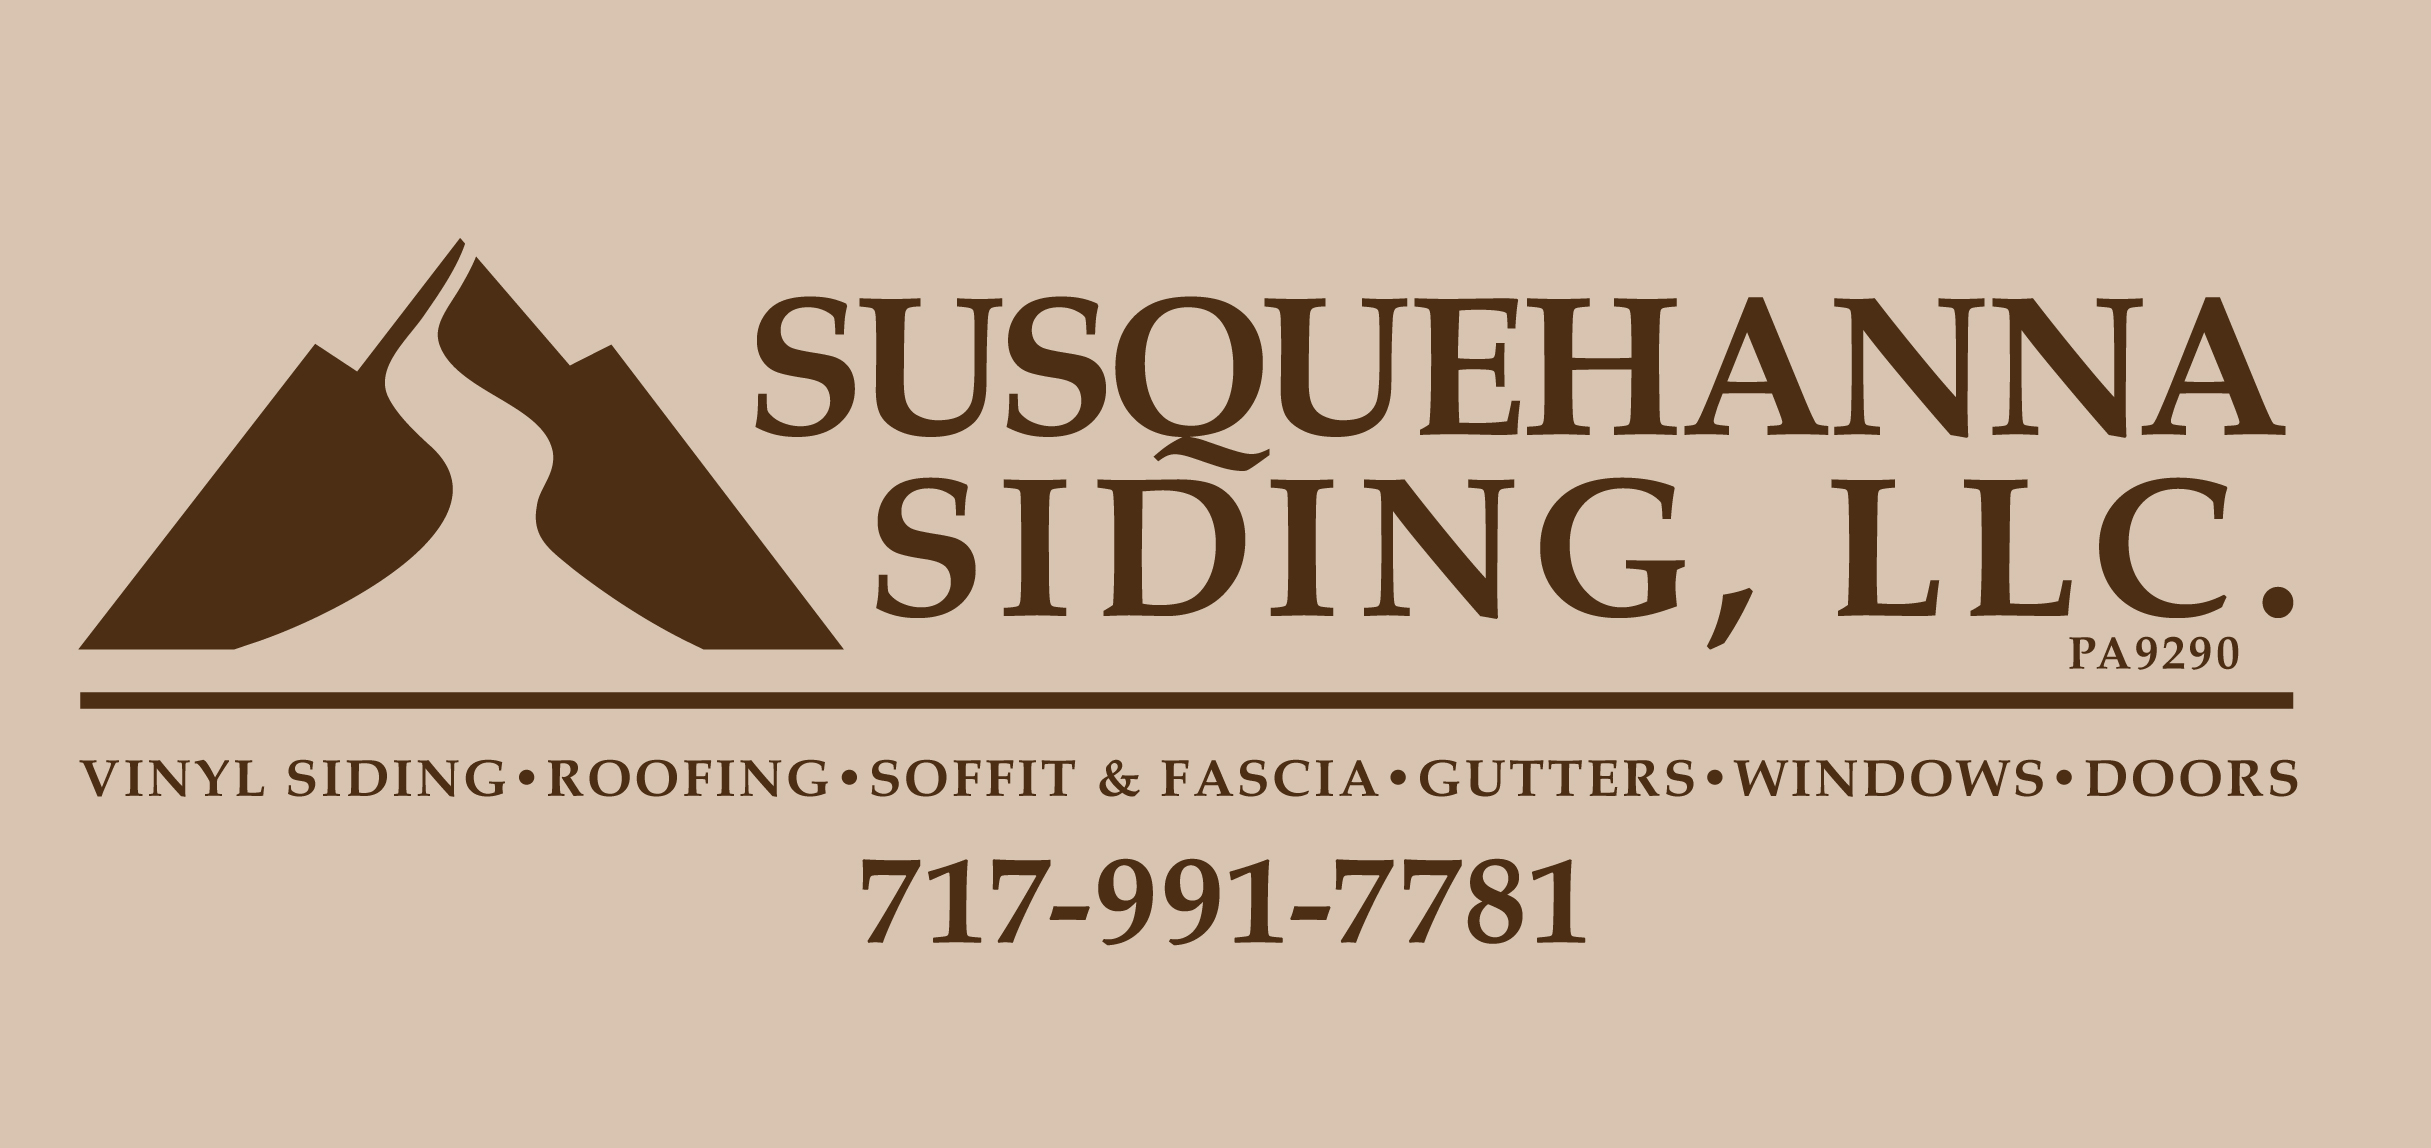 Susquehanna Siding LLC Logo